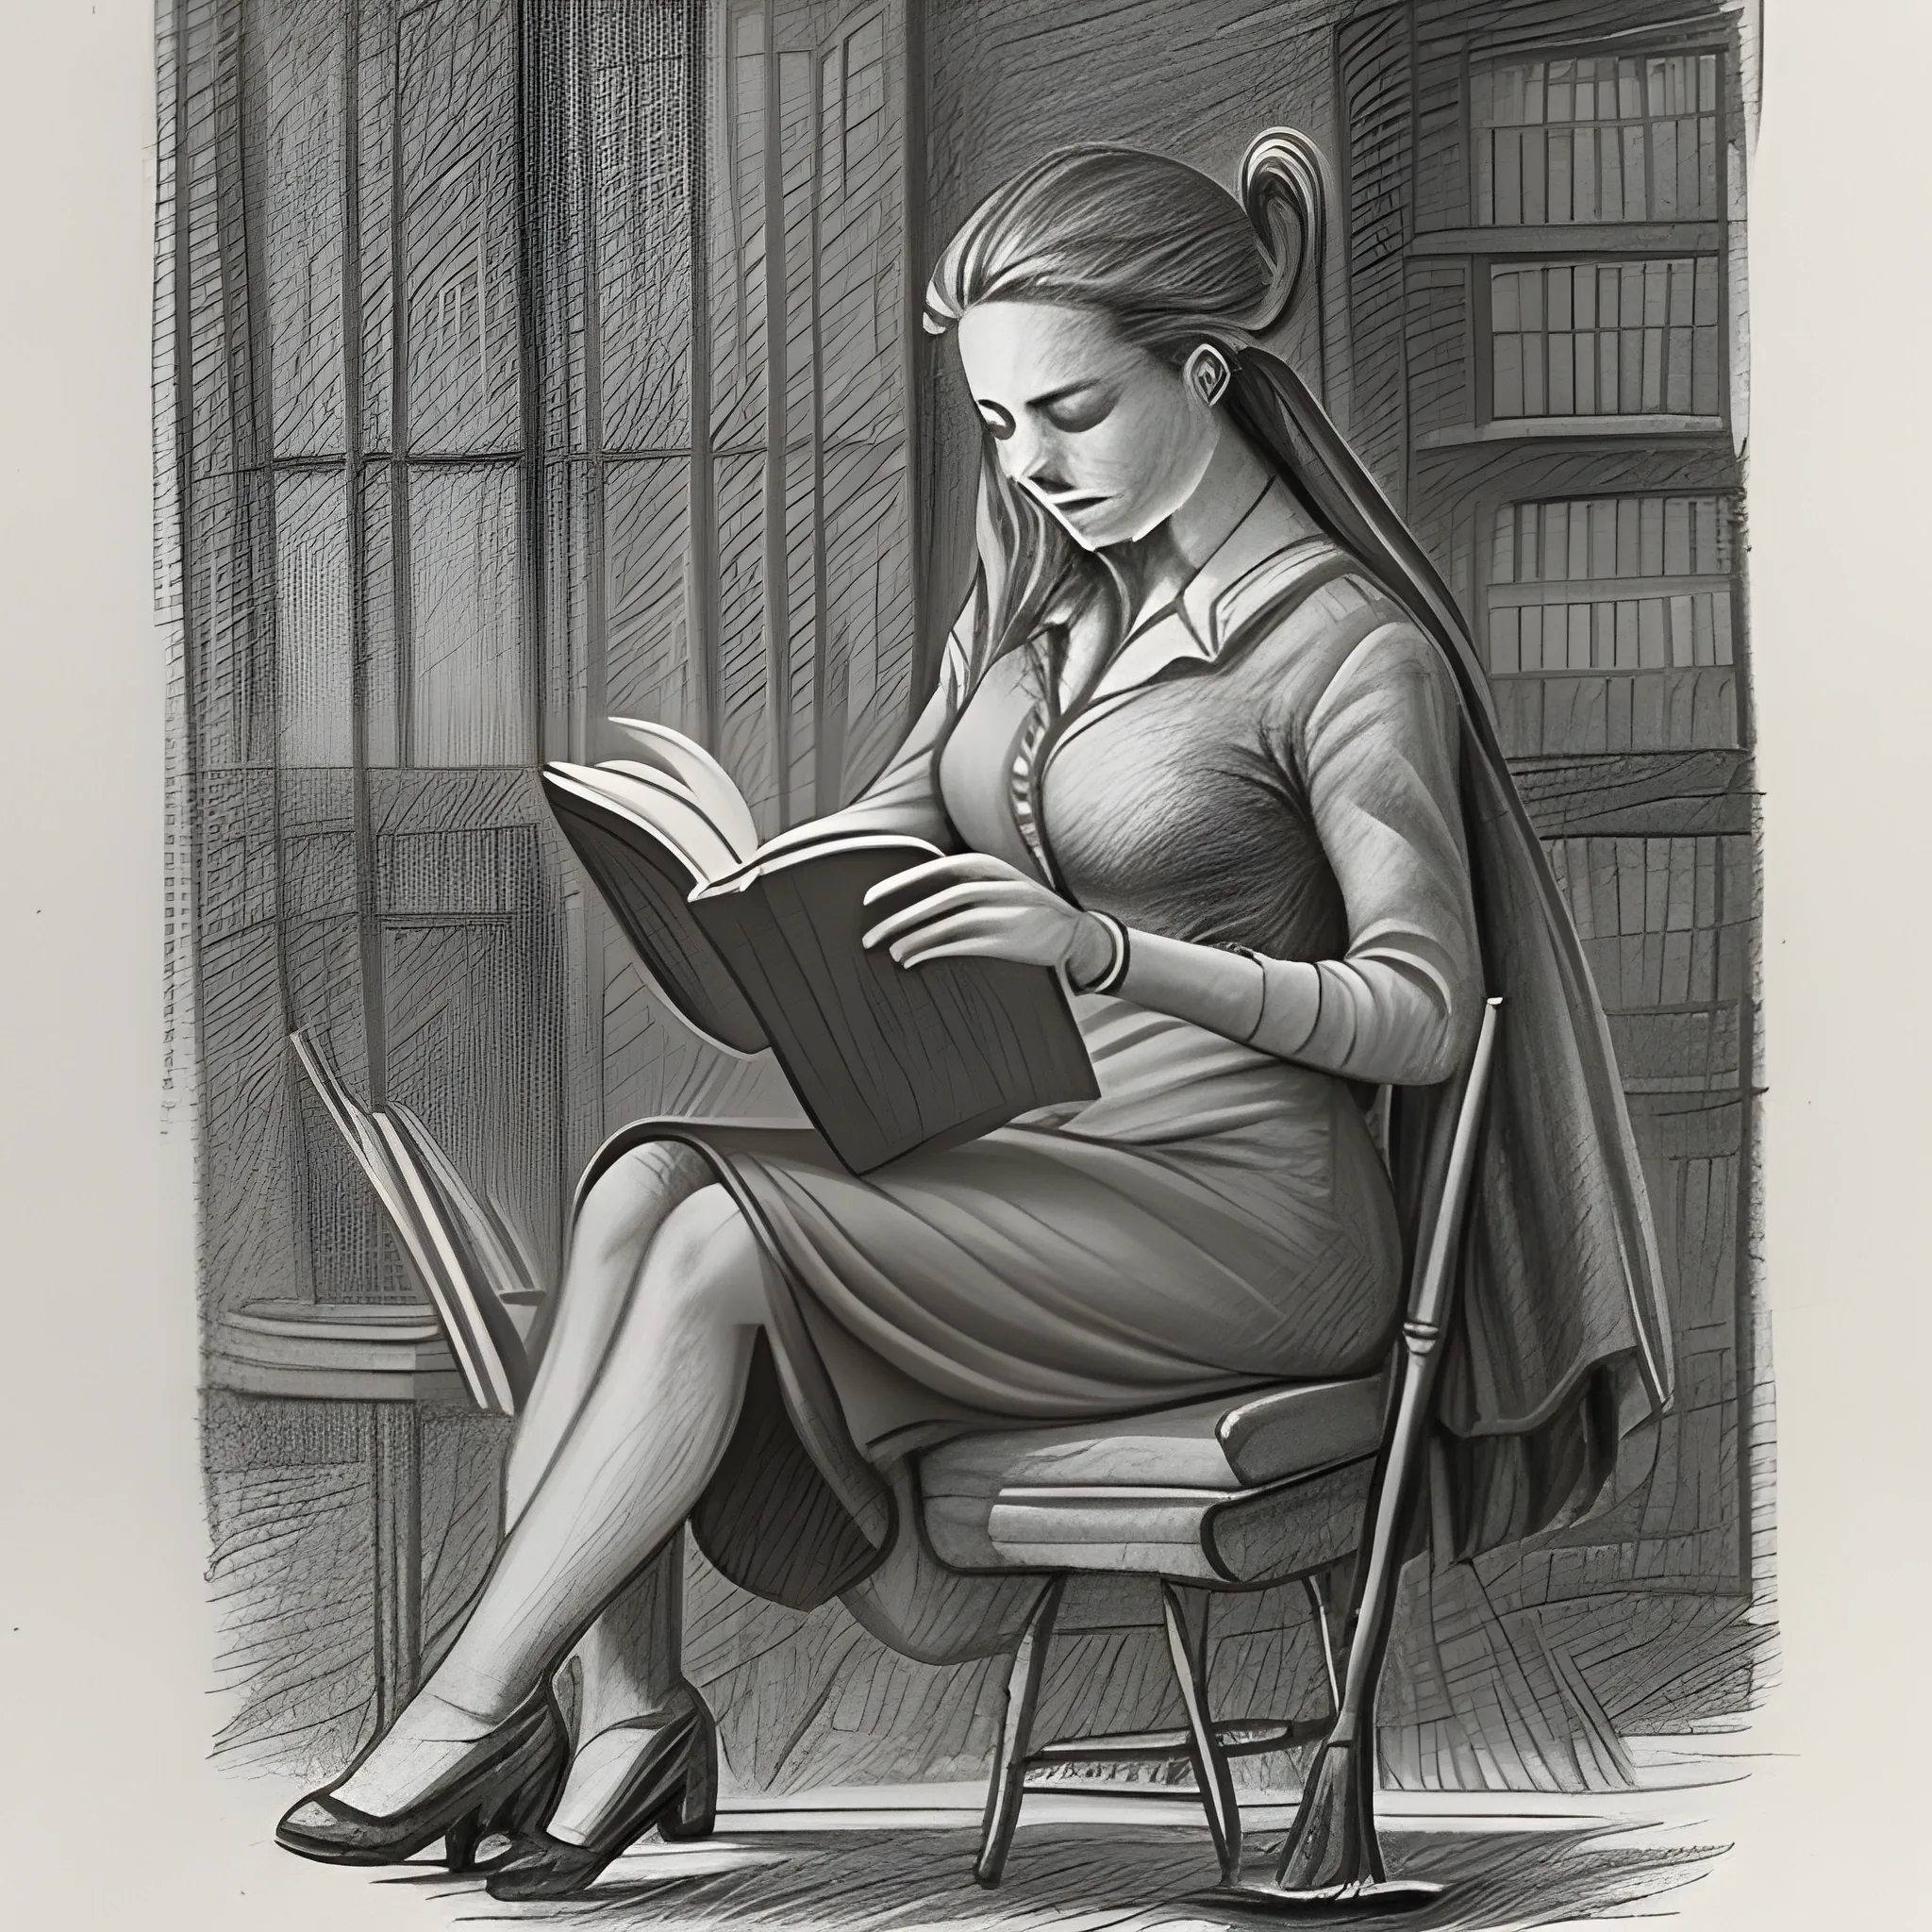 pencil sketch of a woman reading a book, riding a broom